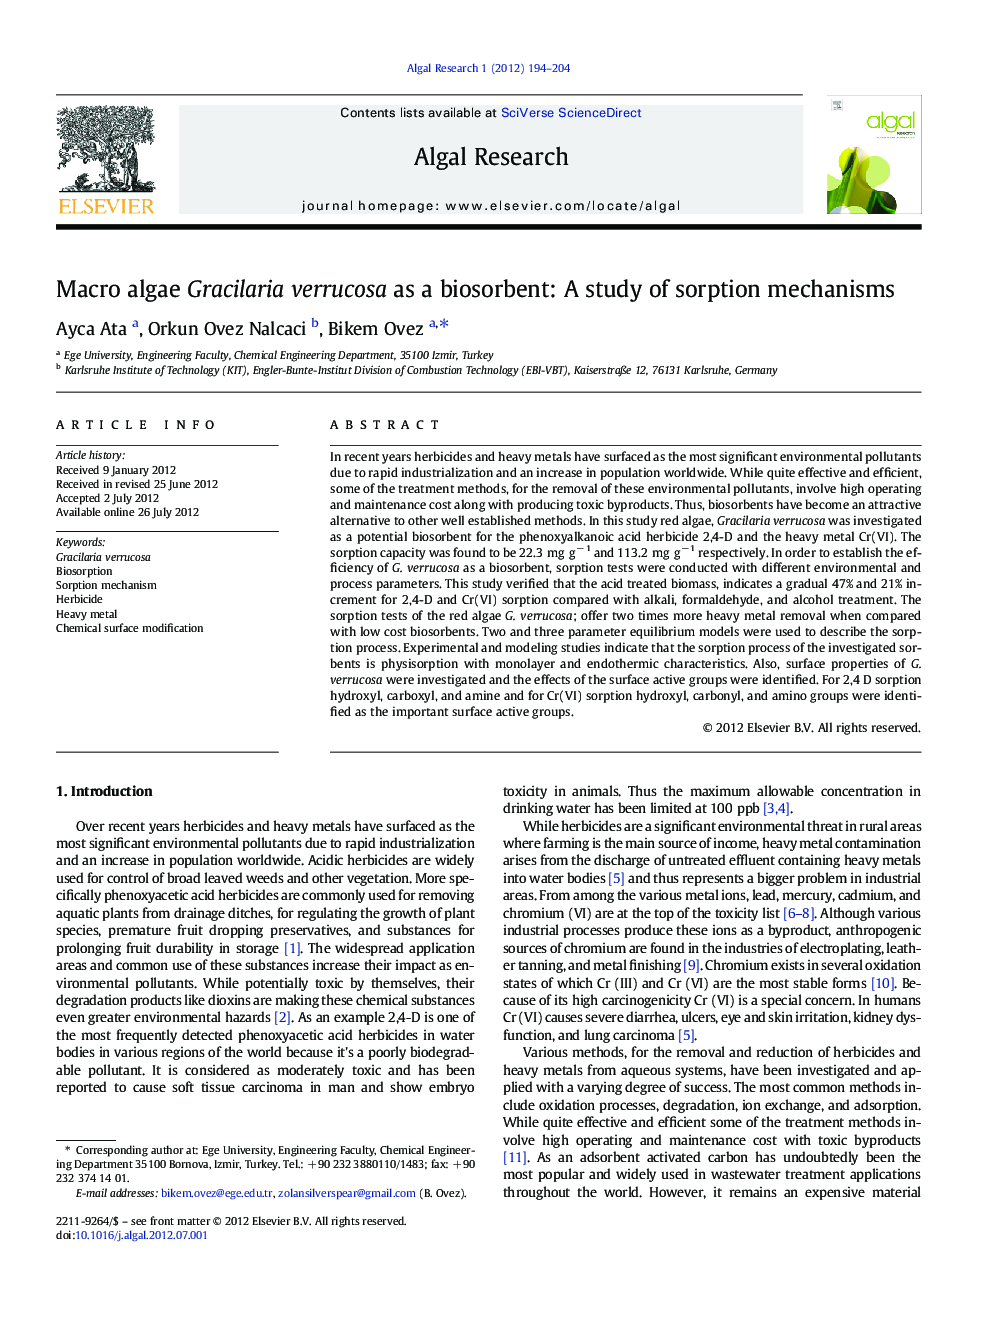 Macro algae Gracilaria verrucosa as a biosorbent: A study of sorption mechanisms